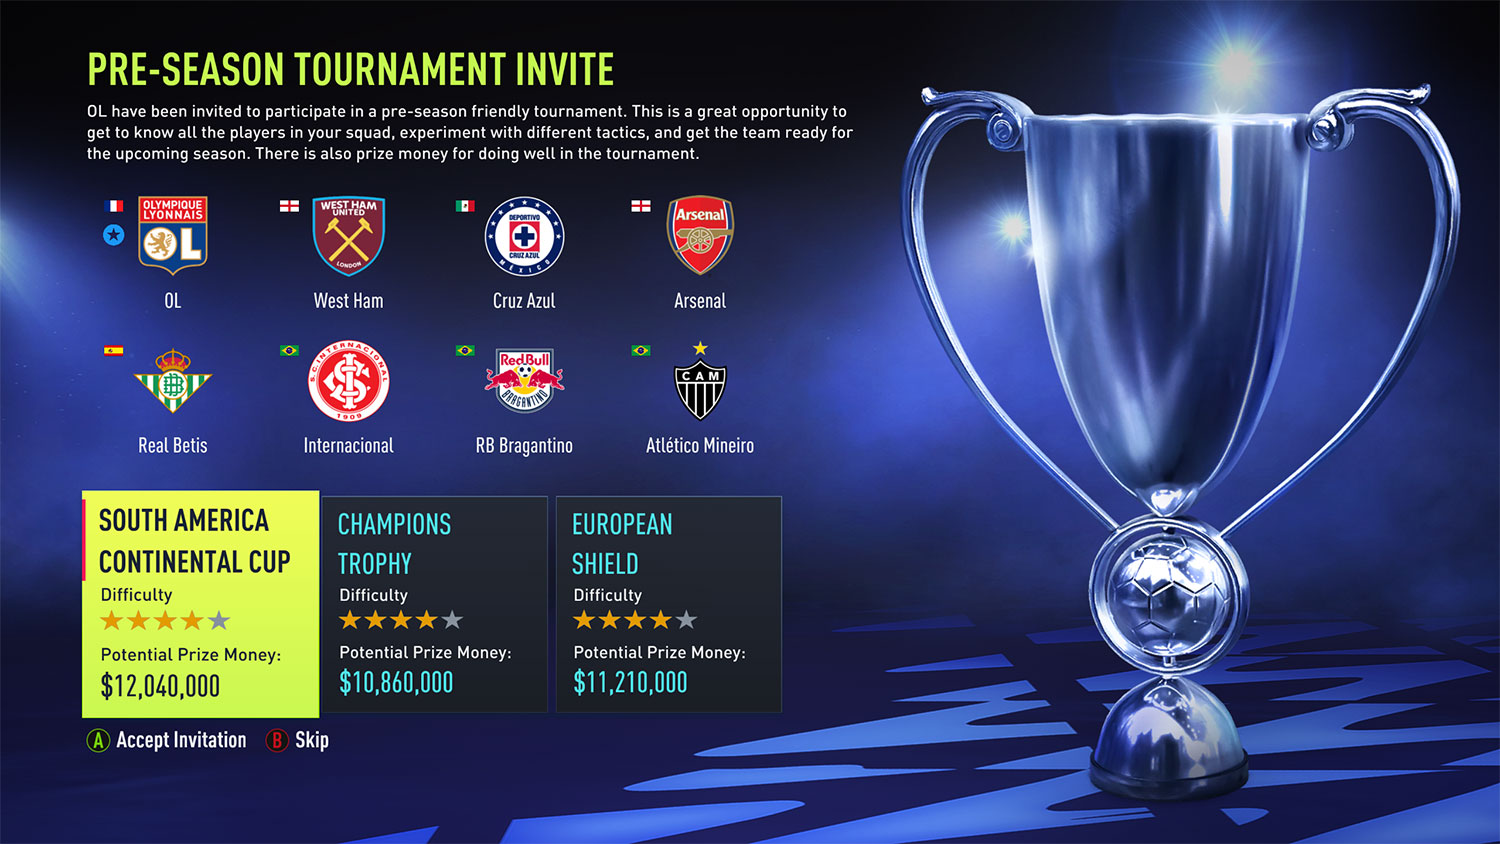 The pre-season tournament selection page in FIFA 22.